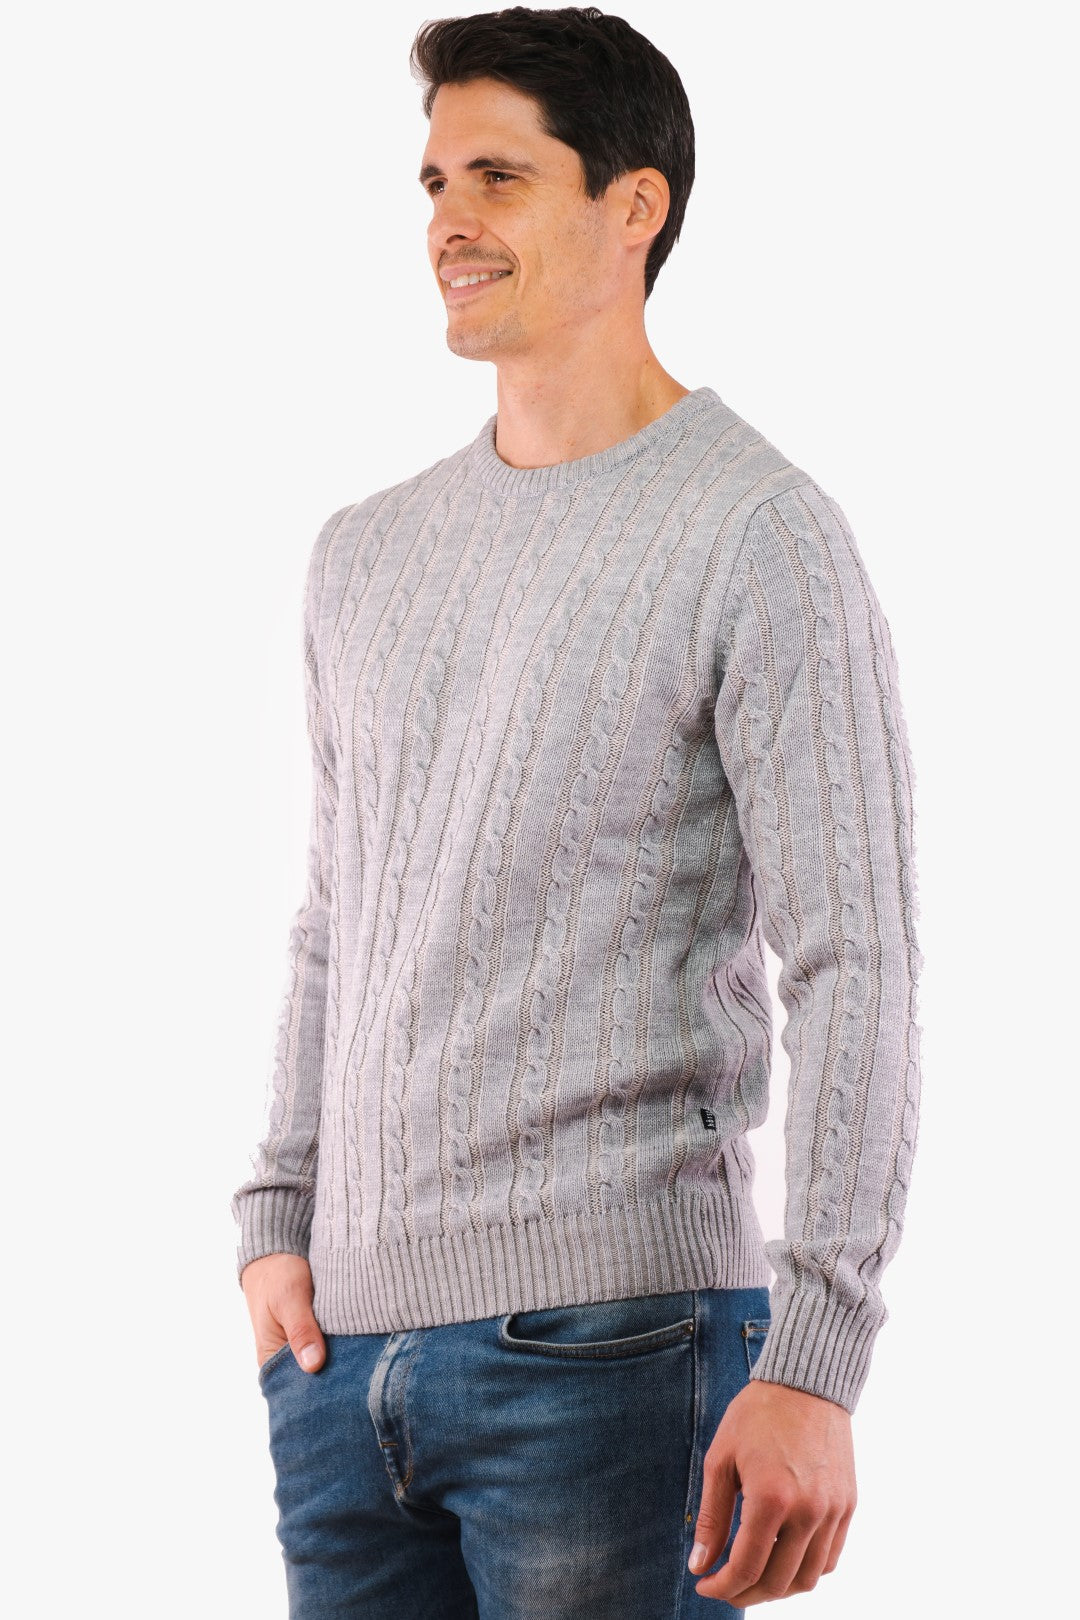 Gray Hörst sweater